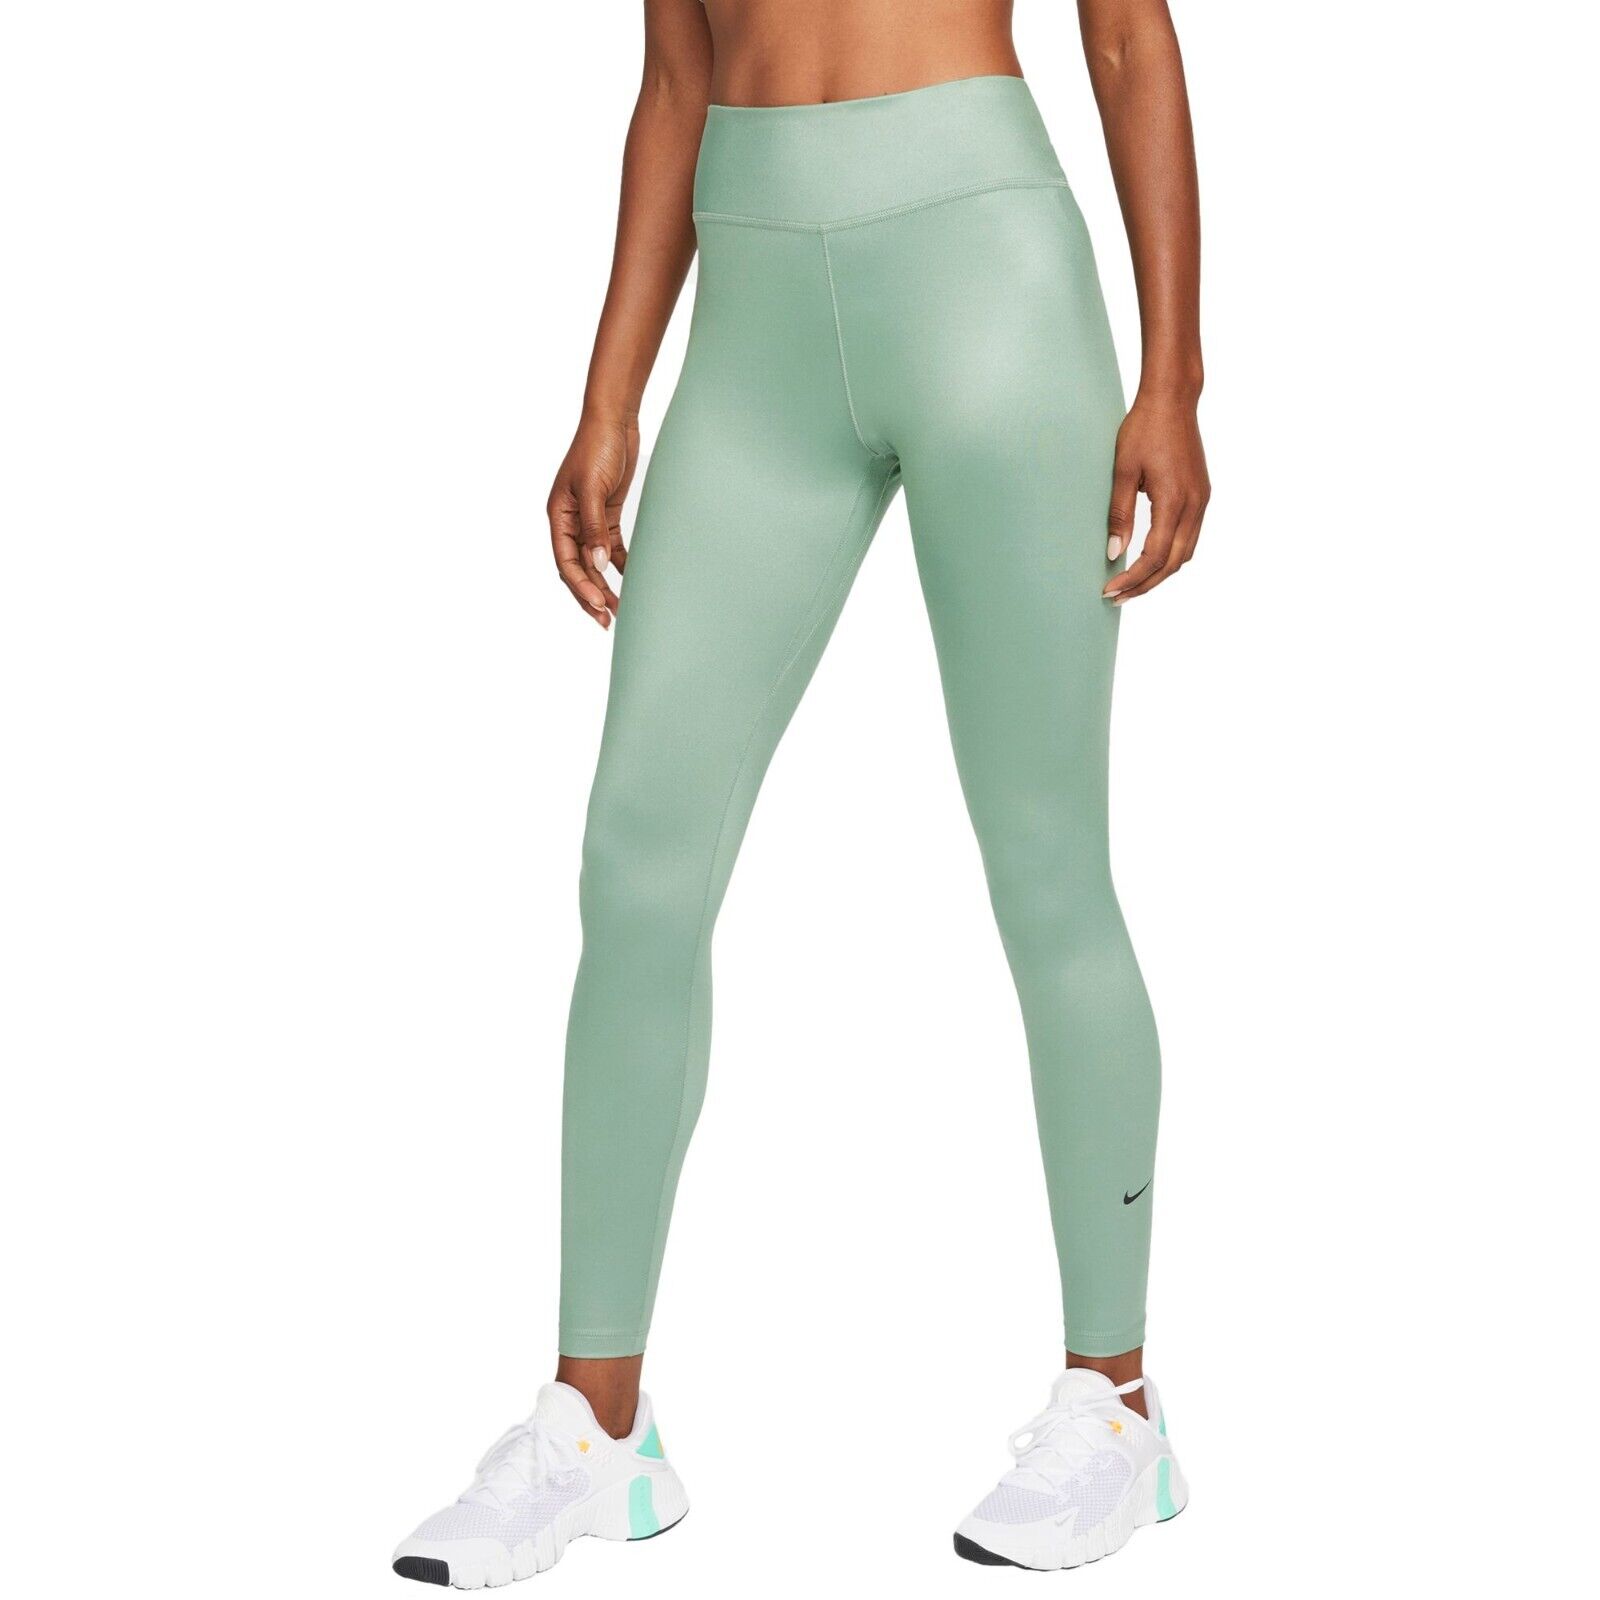 Women's 2XL Nike One Shine Full Length Tights Green XXLarge Mid